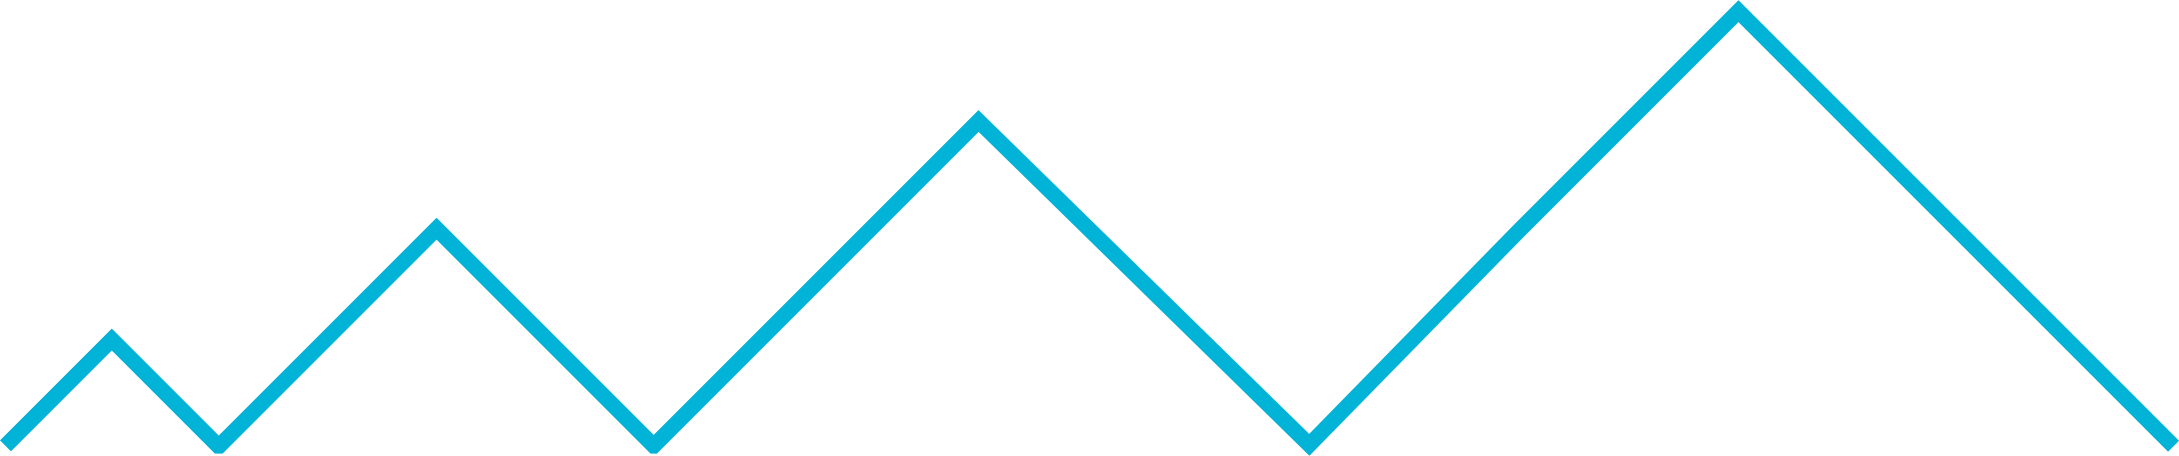 blue gls line chart в PNG, SVG